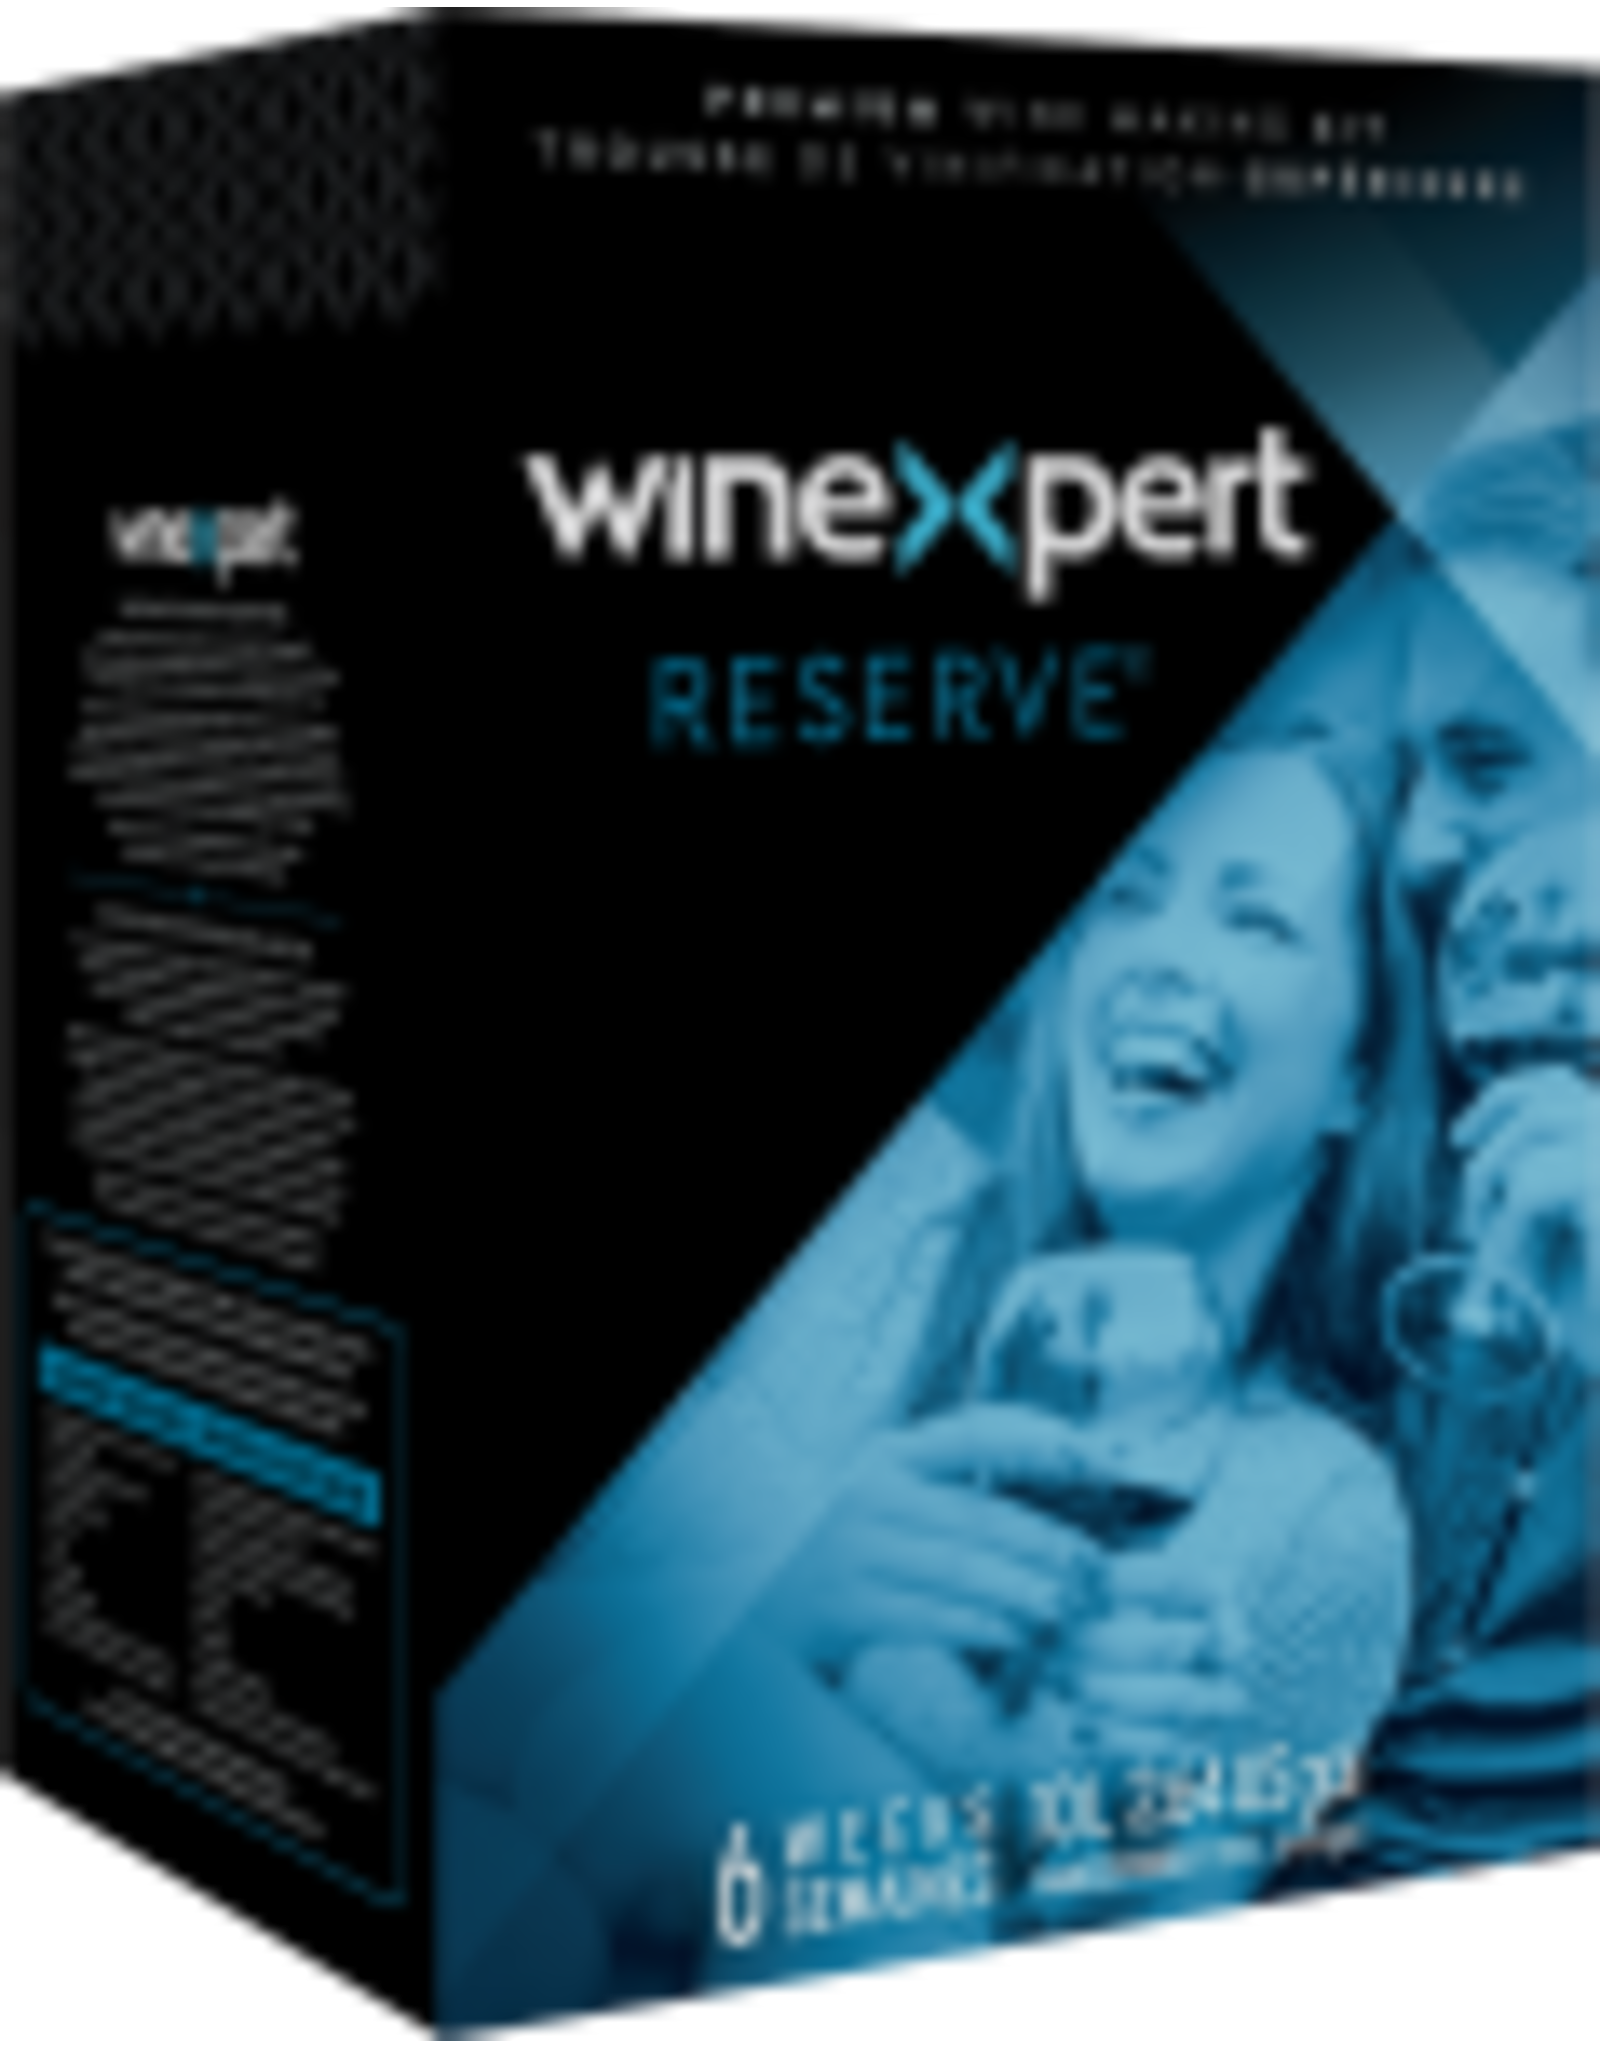 Reserve Winexpert Reserve Riesling California